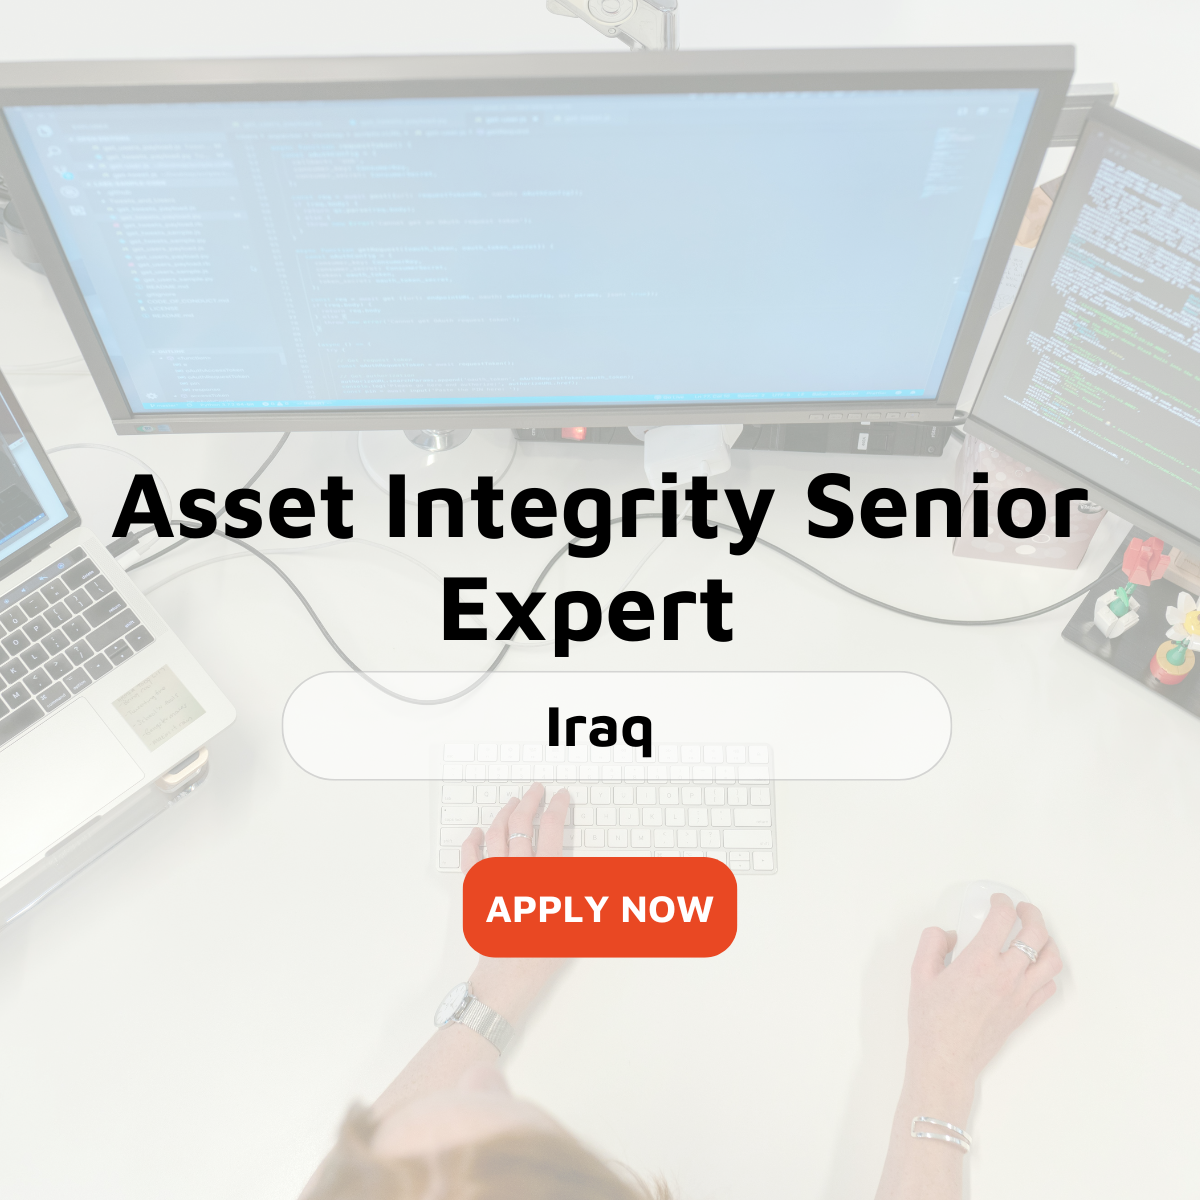 Asset Integrity Senior Expert